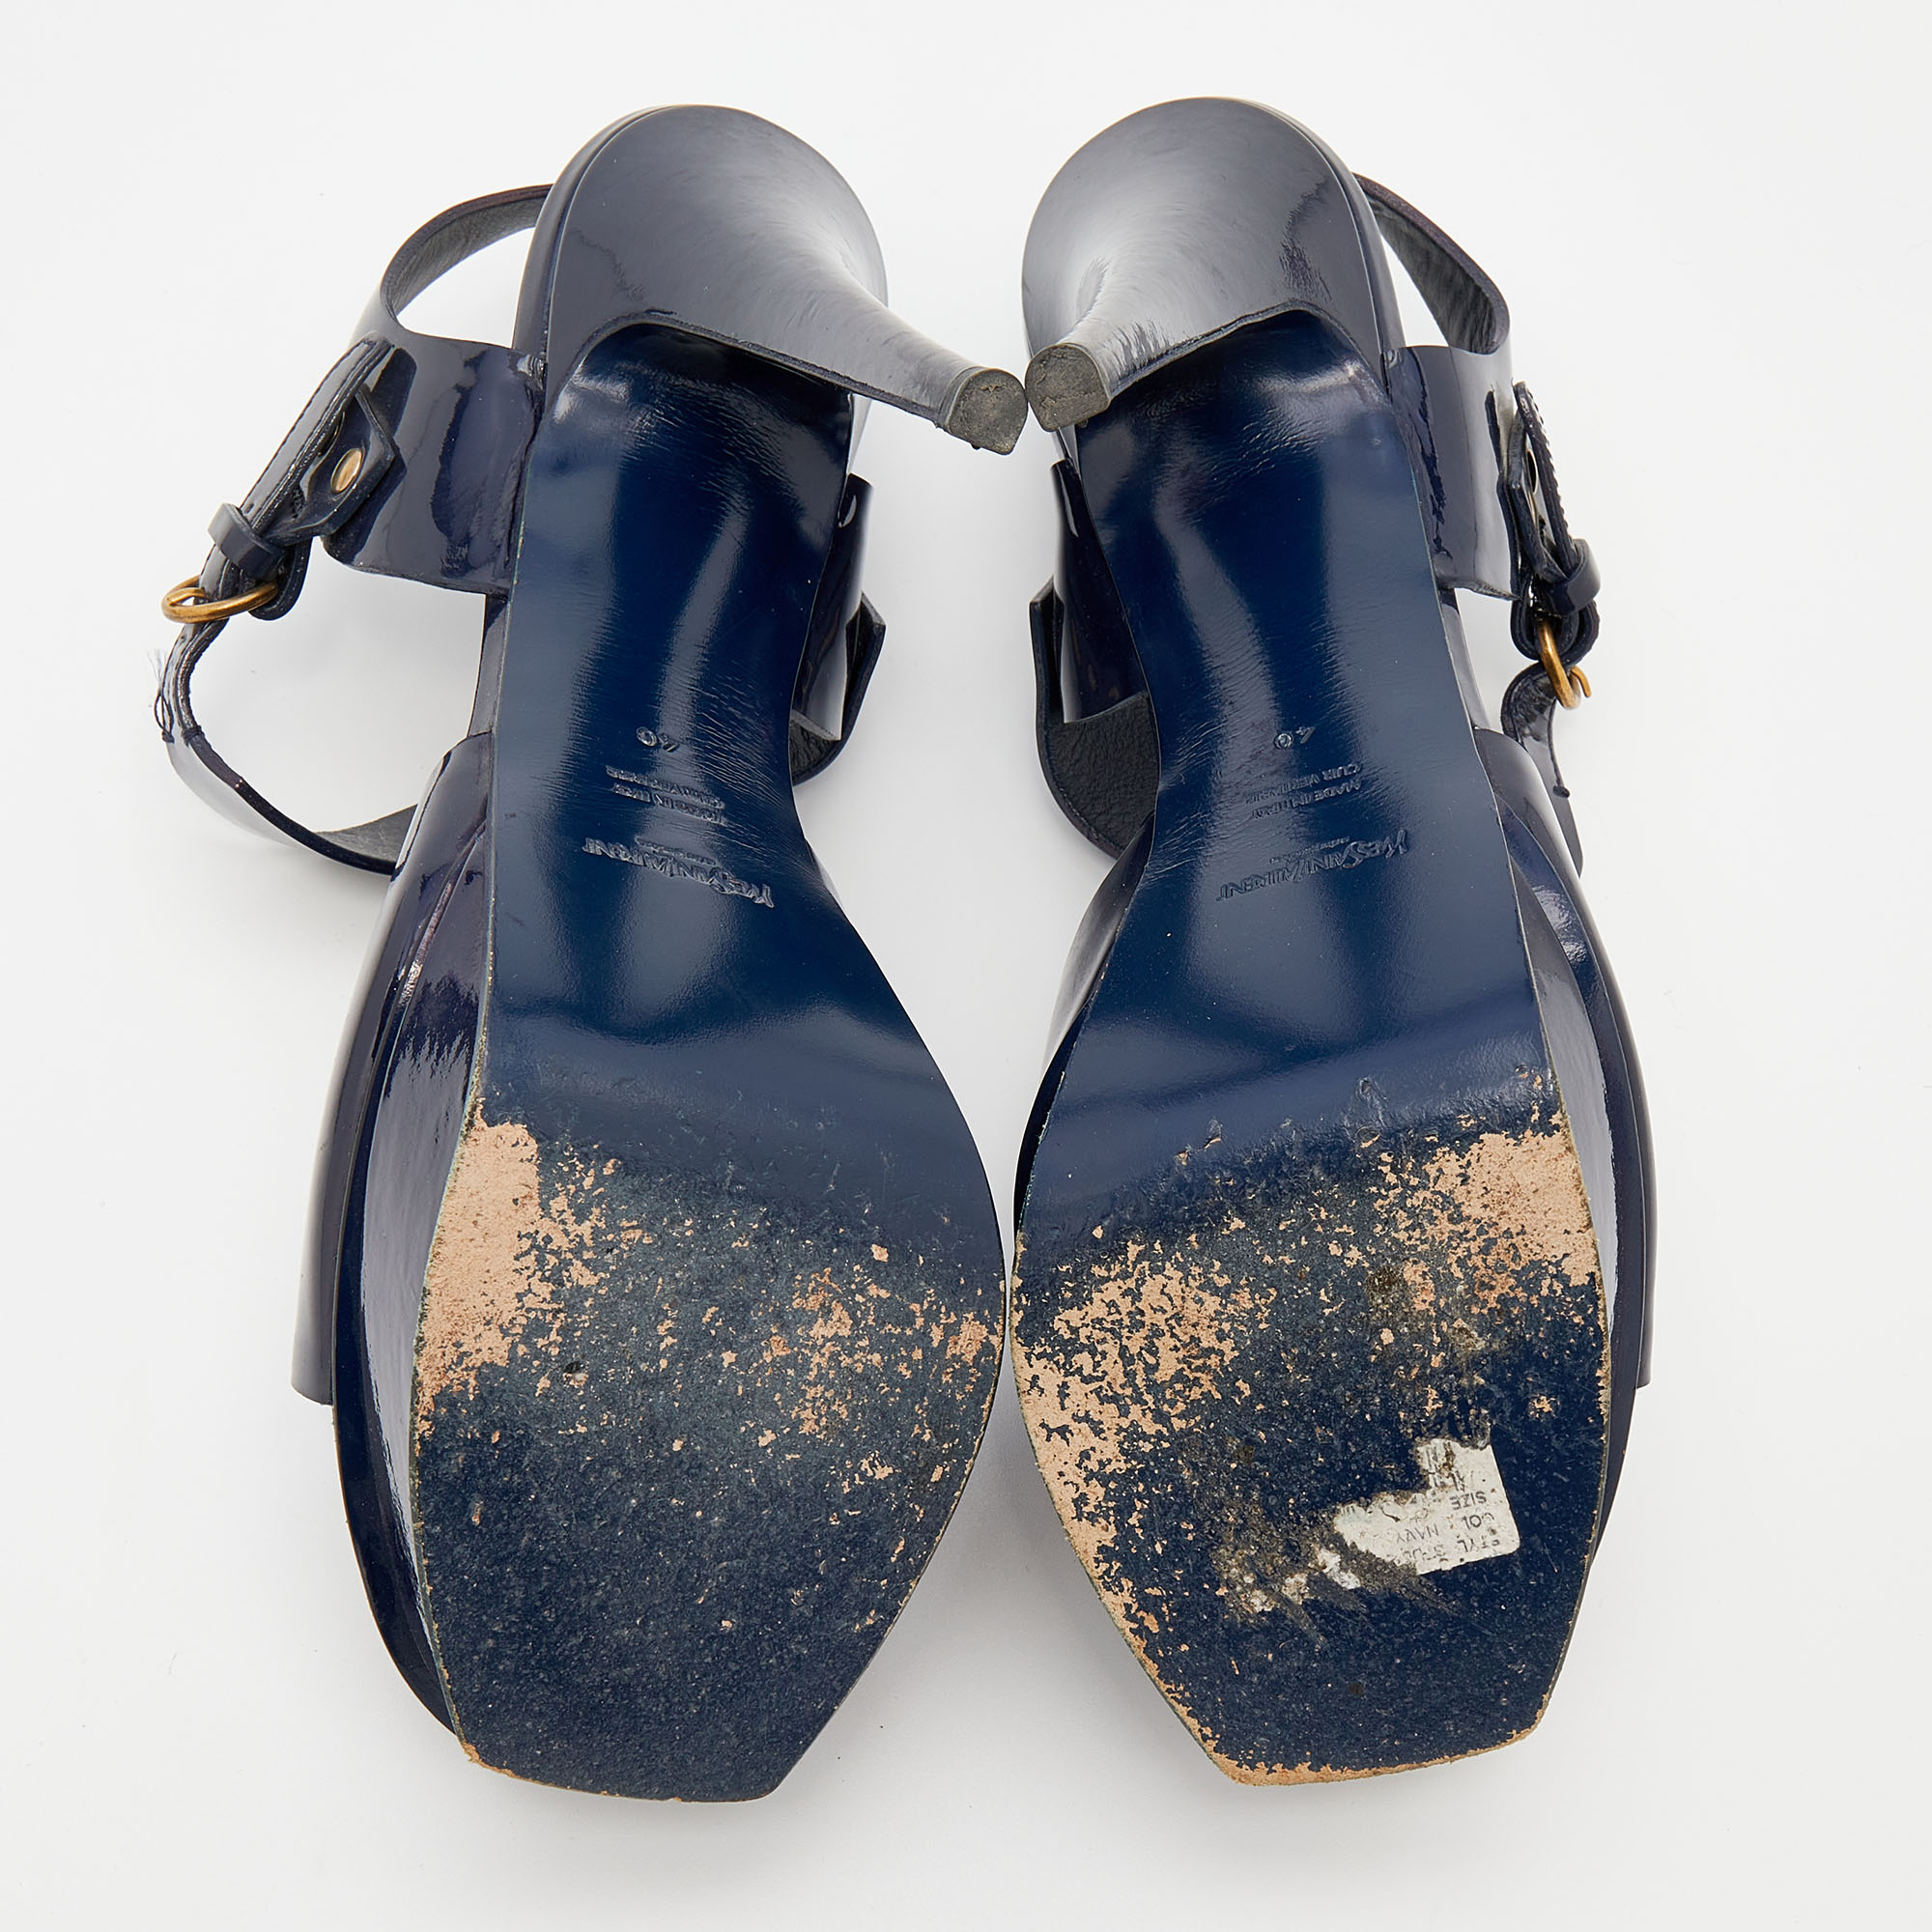 Yves Saint Laurent Navy Blue Patent Leather Studded Ankle Strap Platform Sandals Size 40